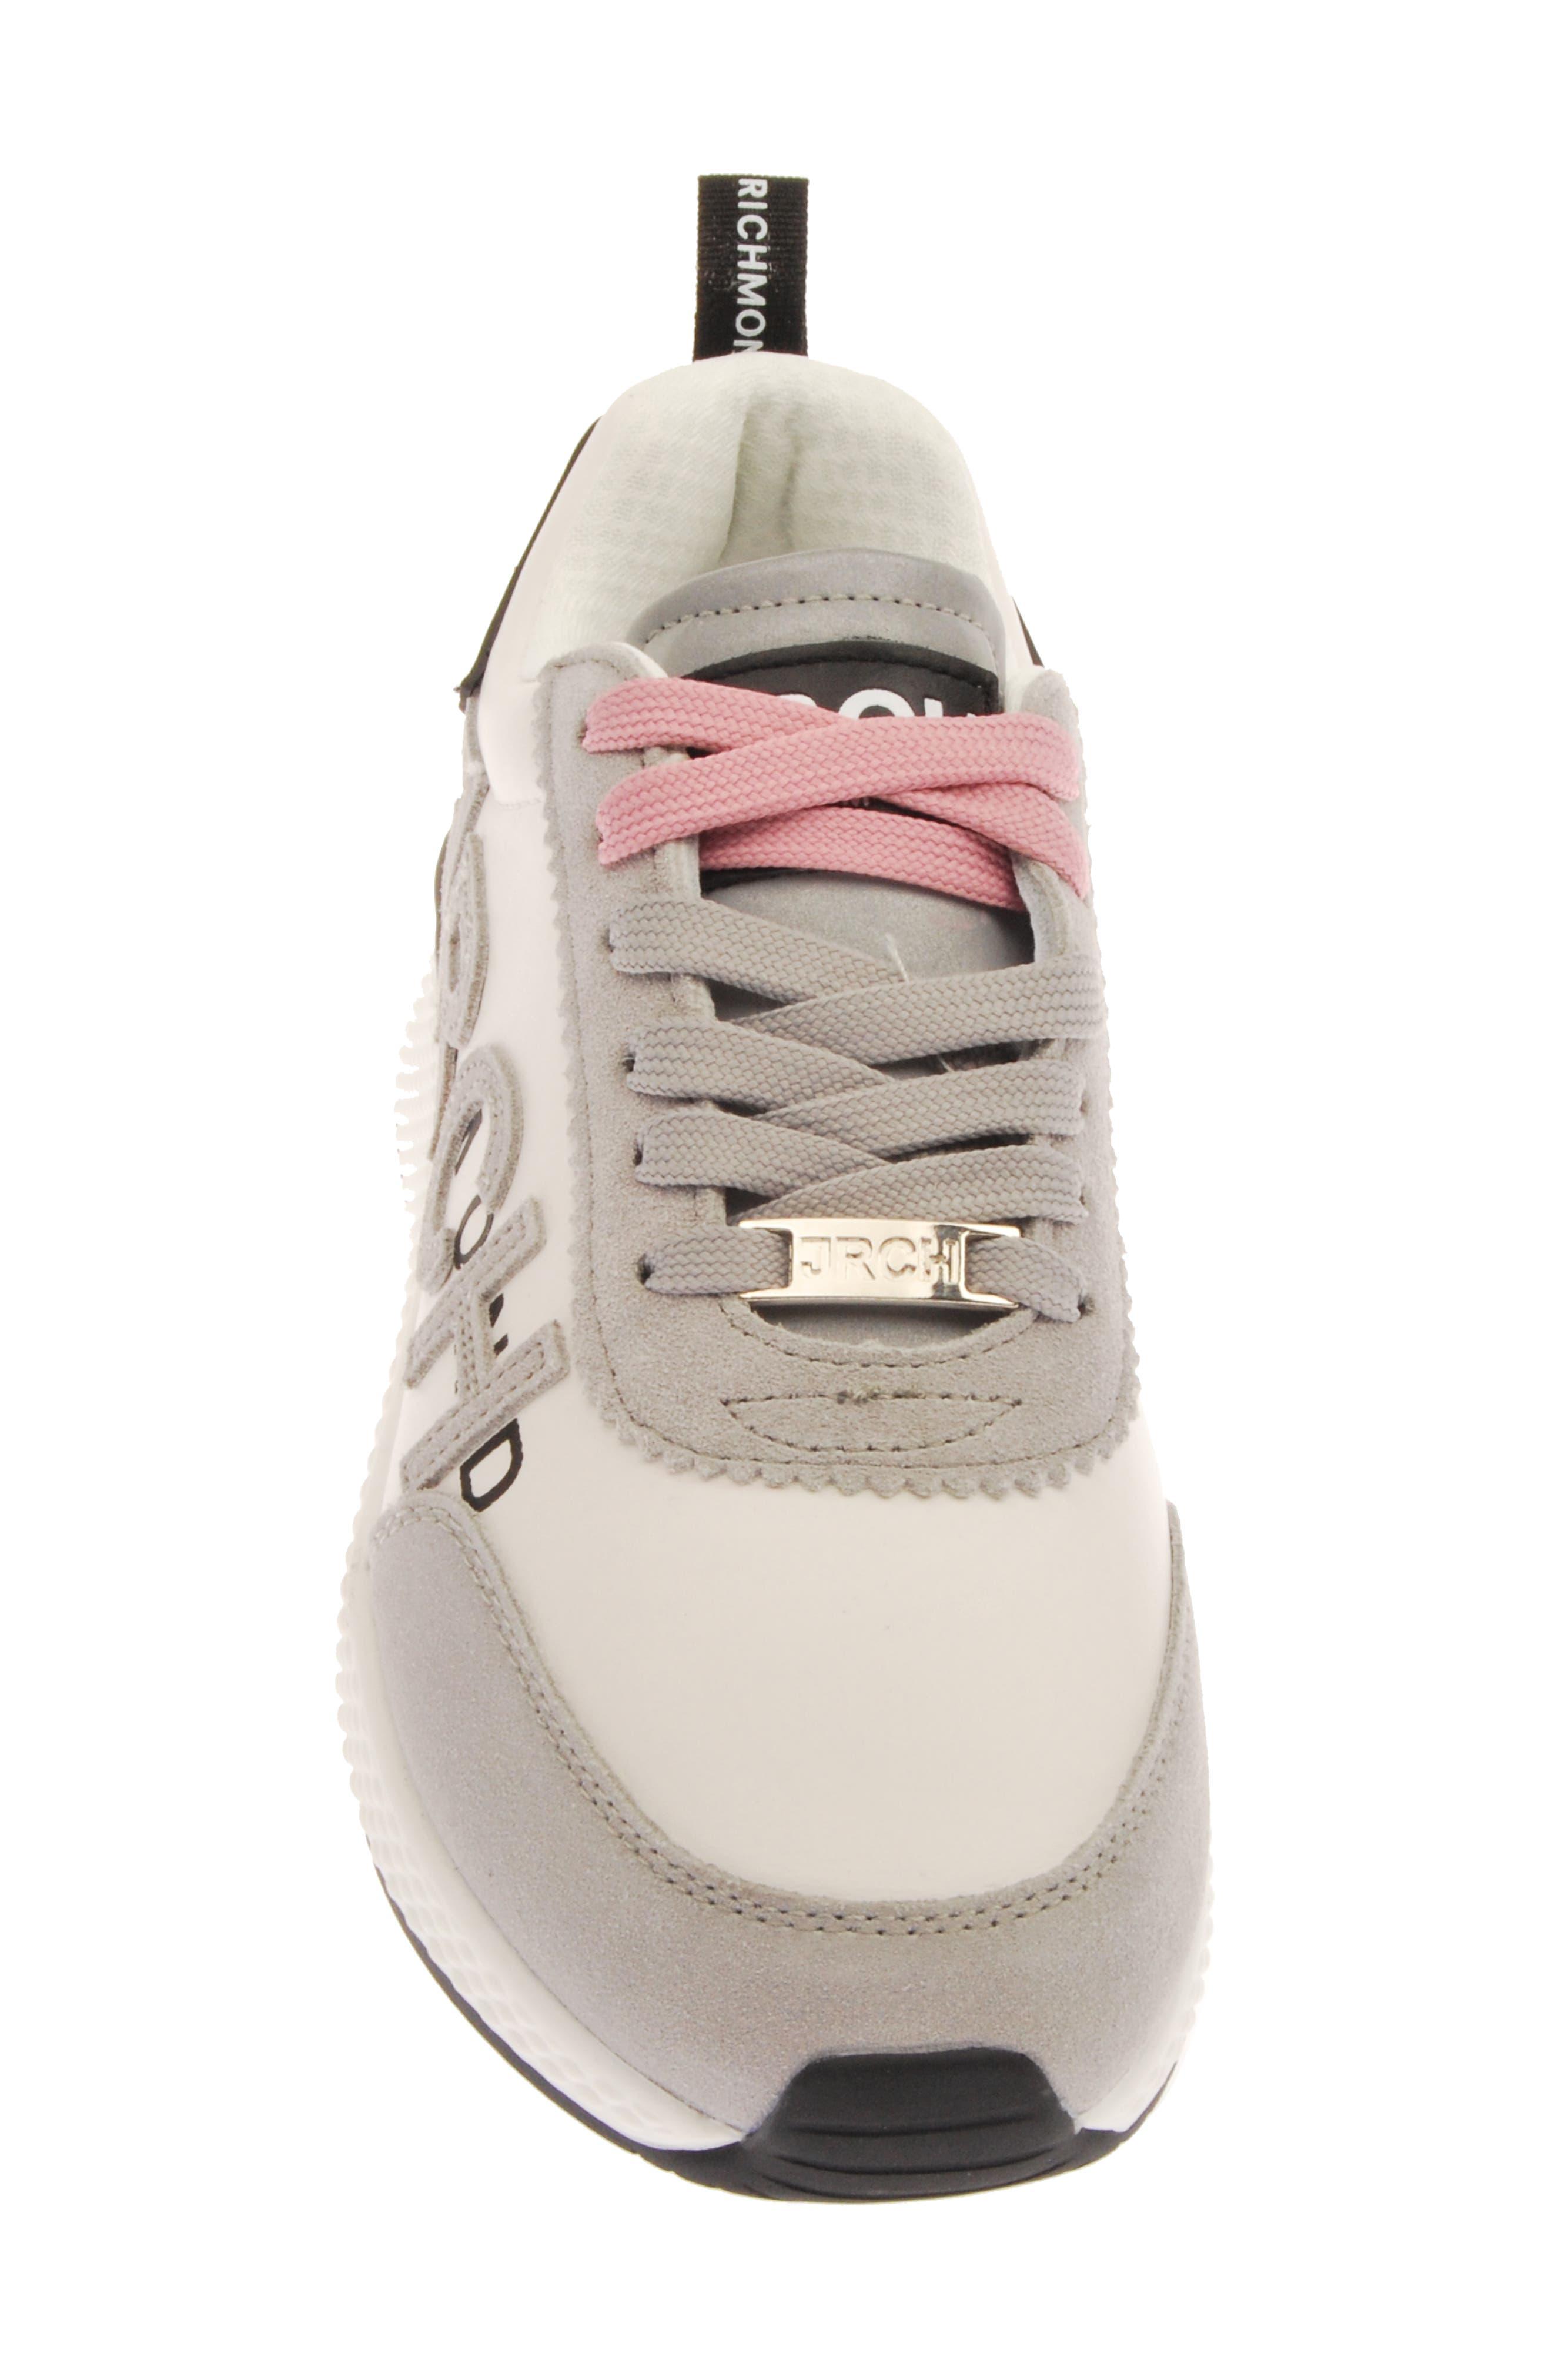 John Richmond Lace-up Fashion Tennis Shoe in White | Lyst